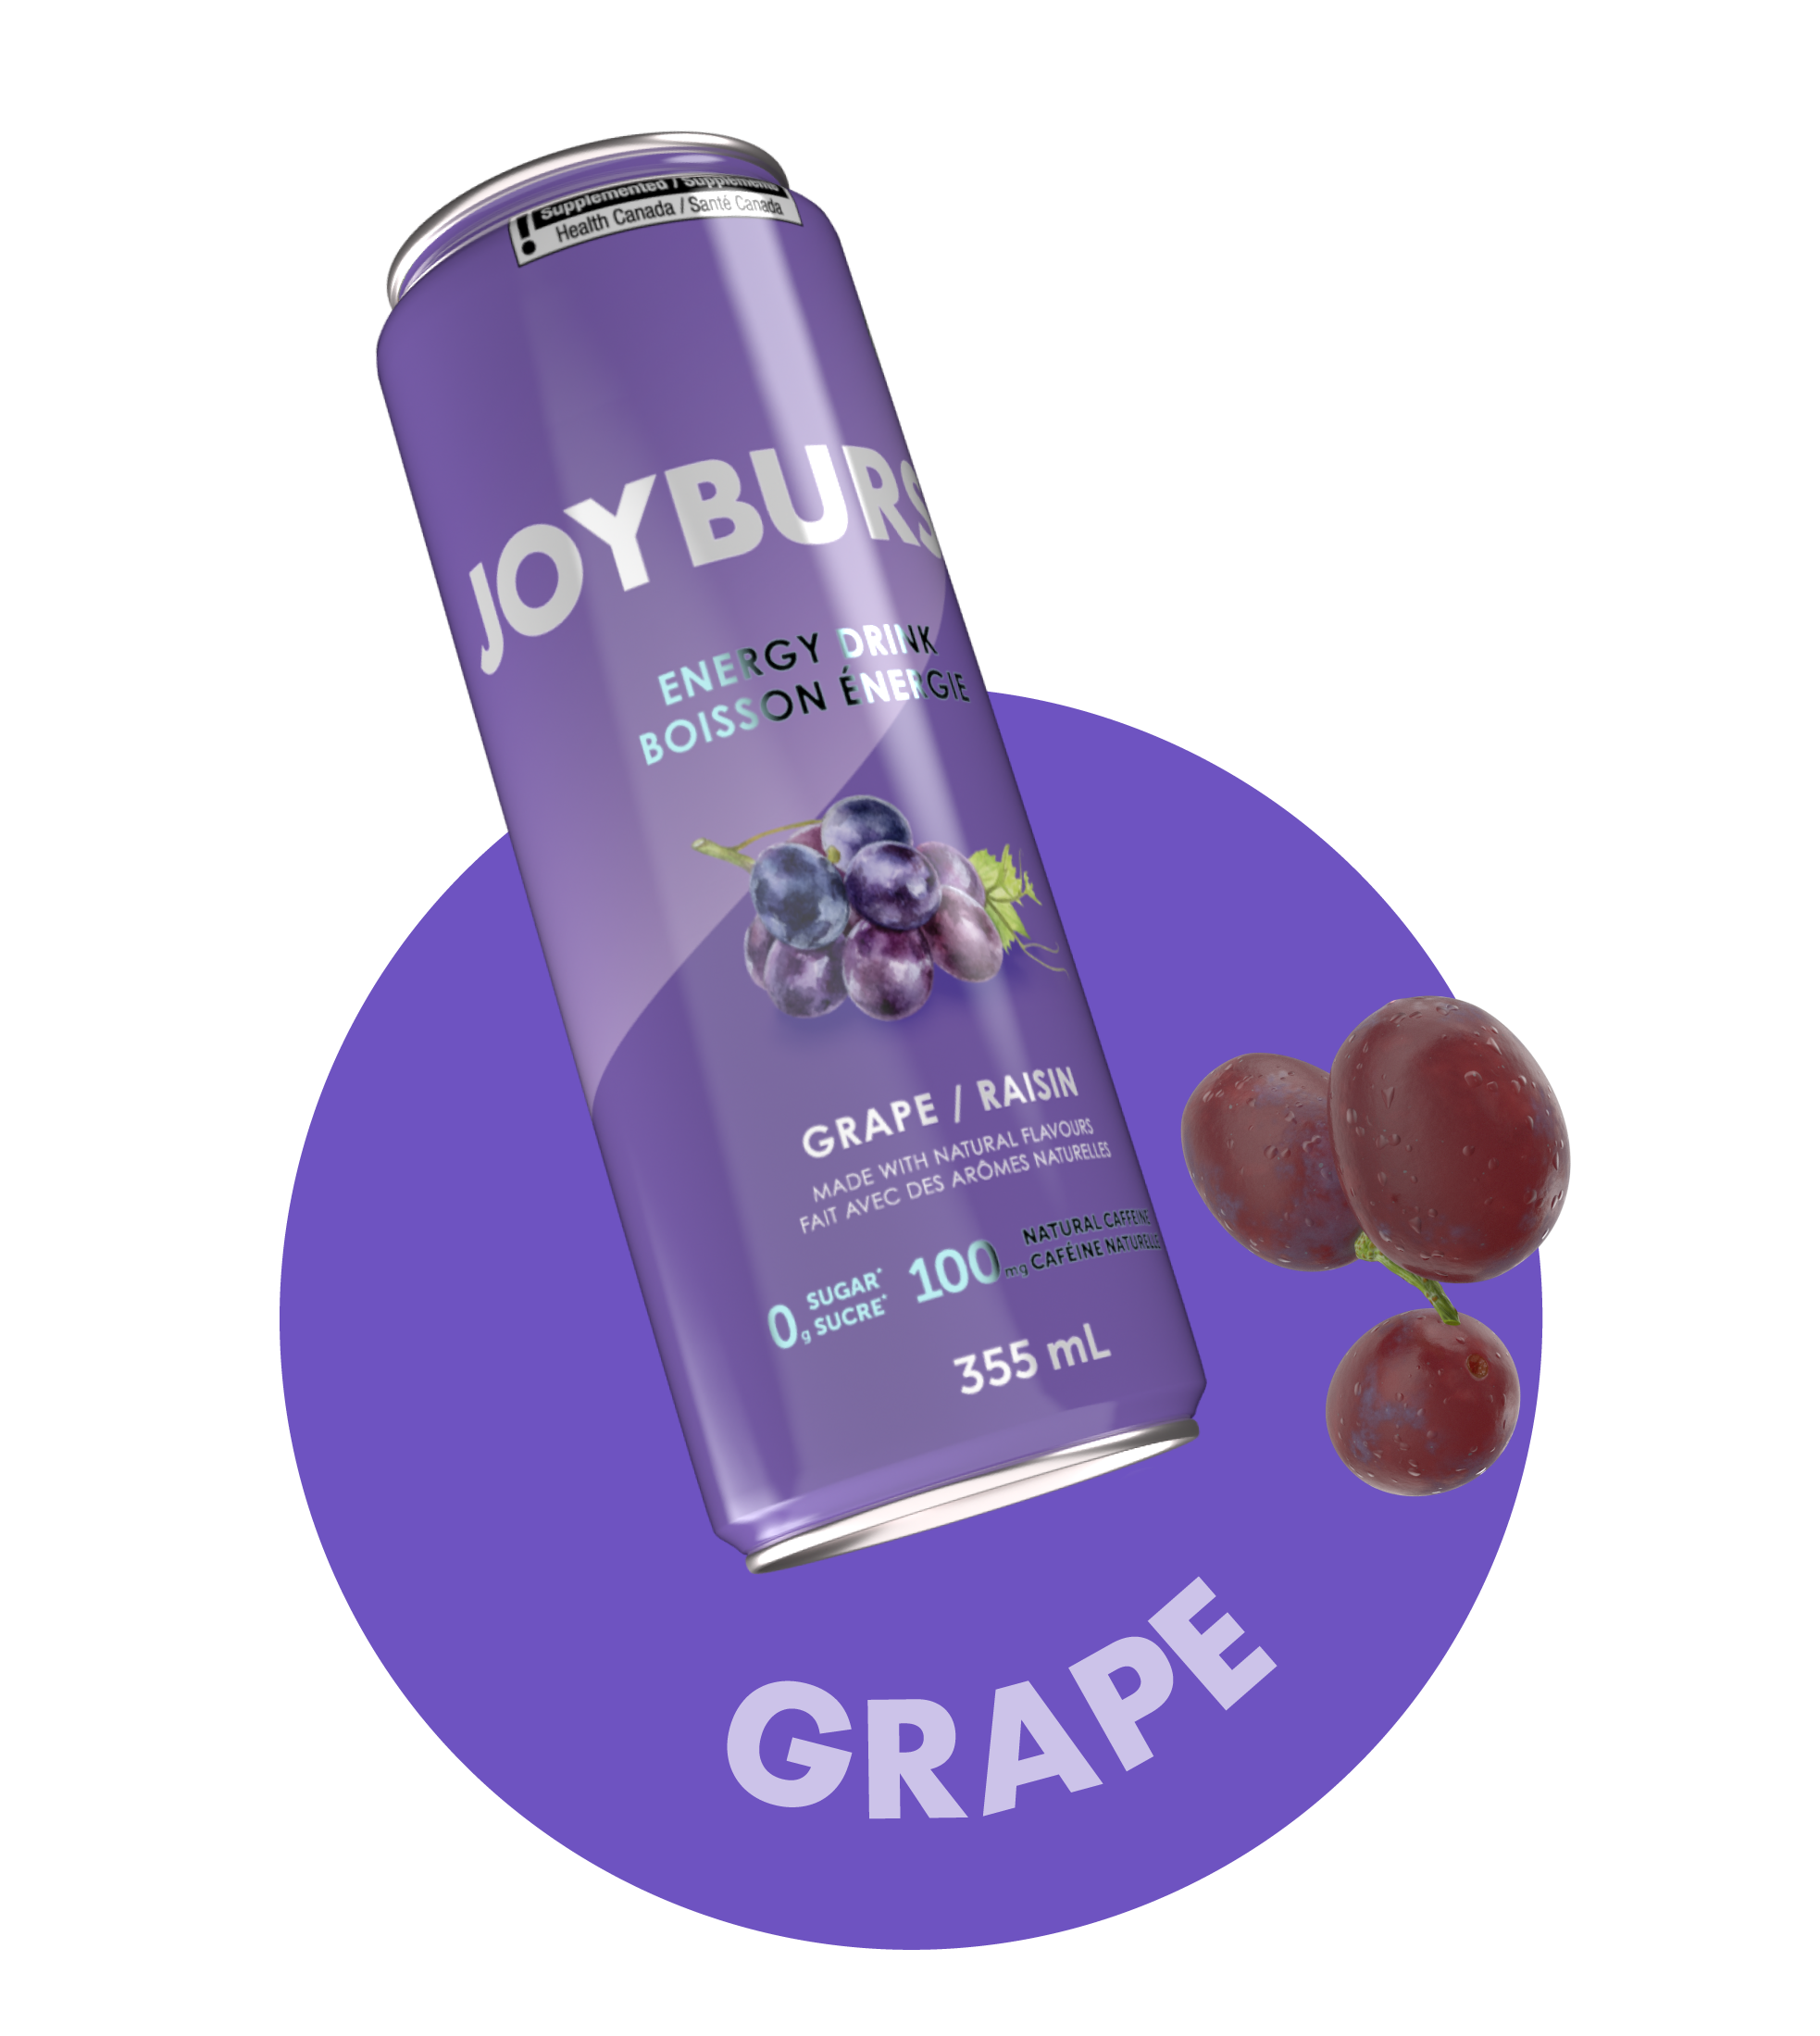 Joyburst Energy Drink Grape